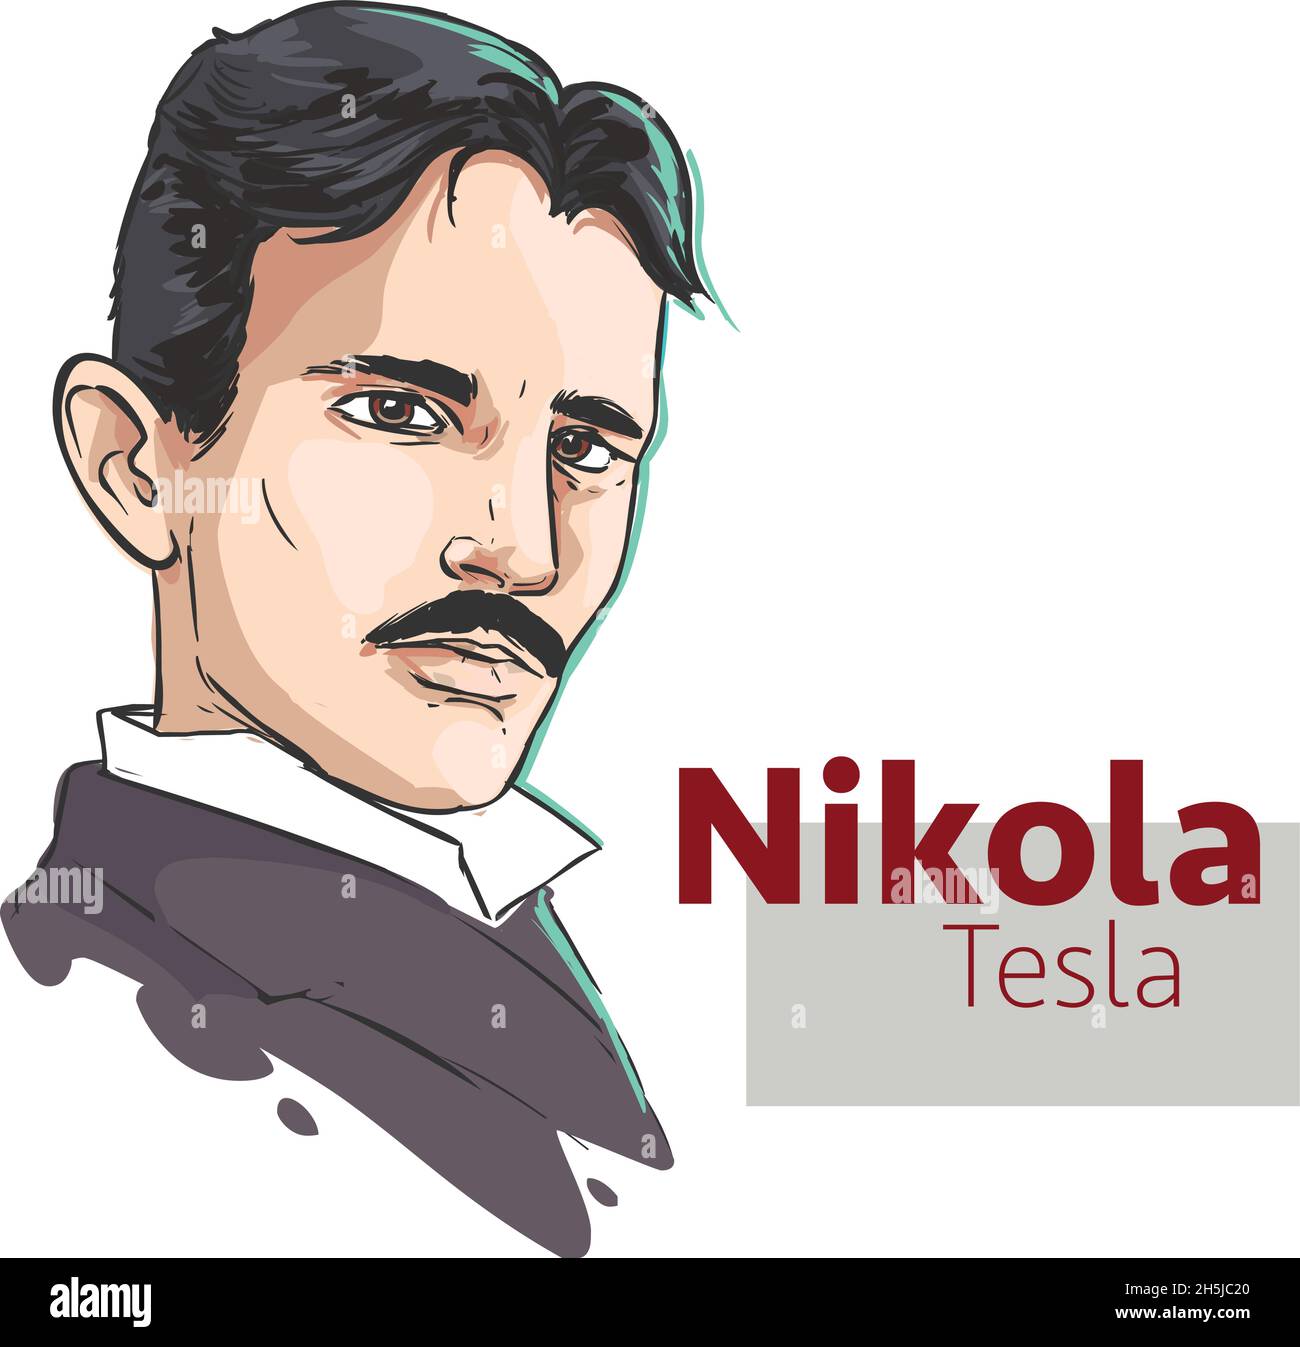 Vector illustration of a Nikola Tesla - portrait Stock Vector